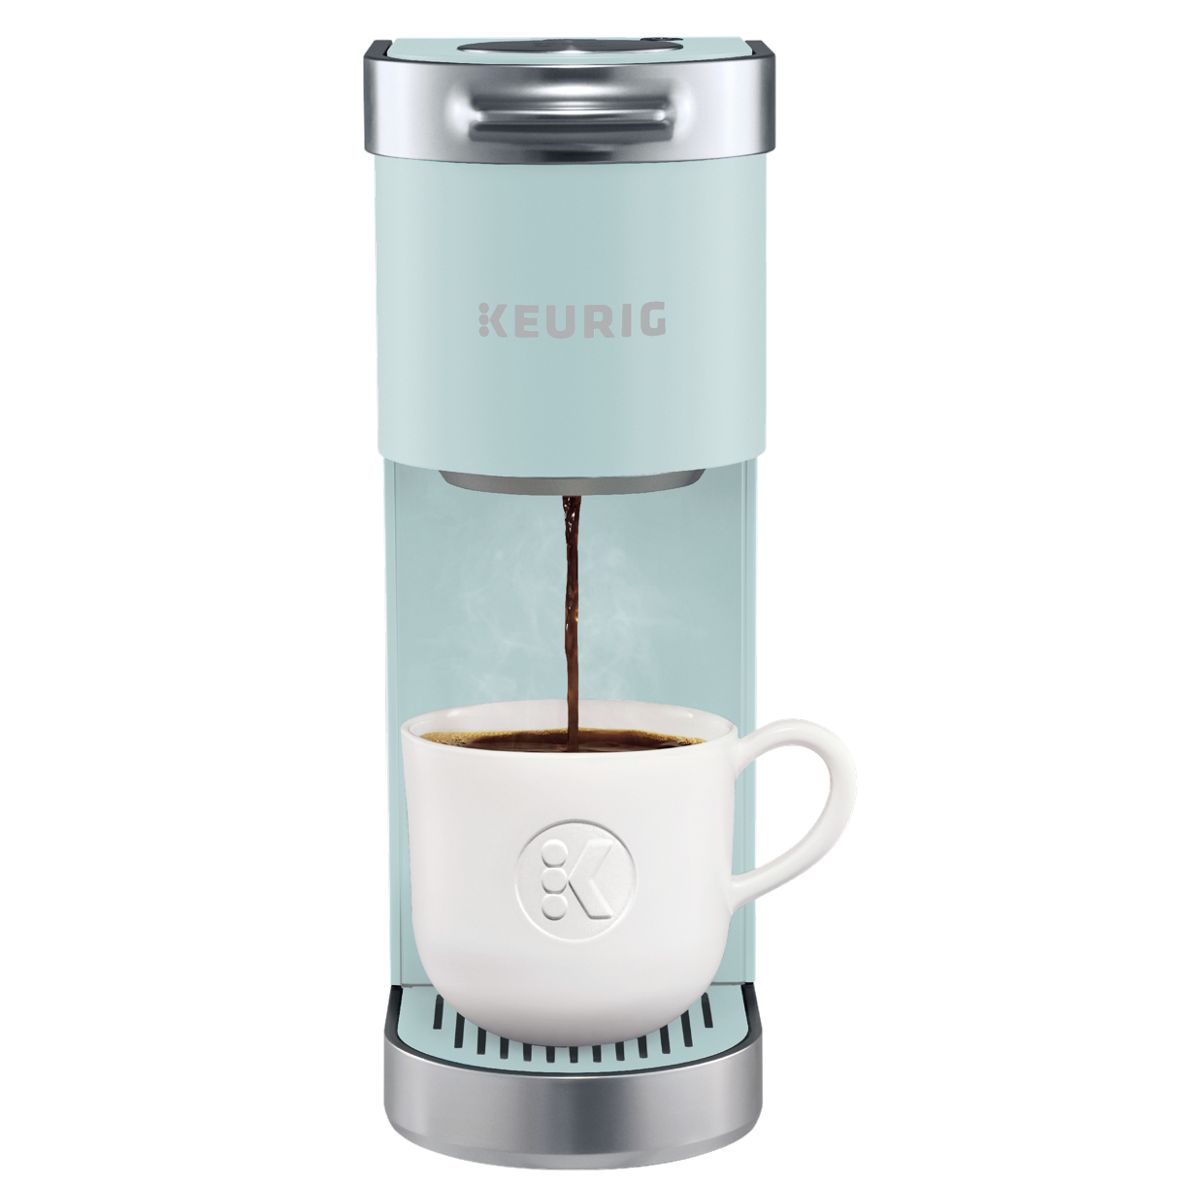 Keurig K-Mini Plus Single Serve Coffee Maker - Misty Green